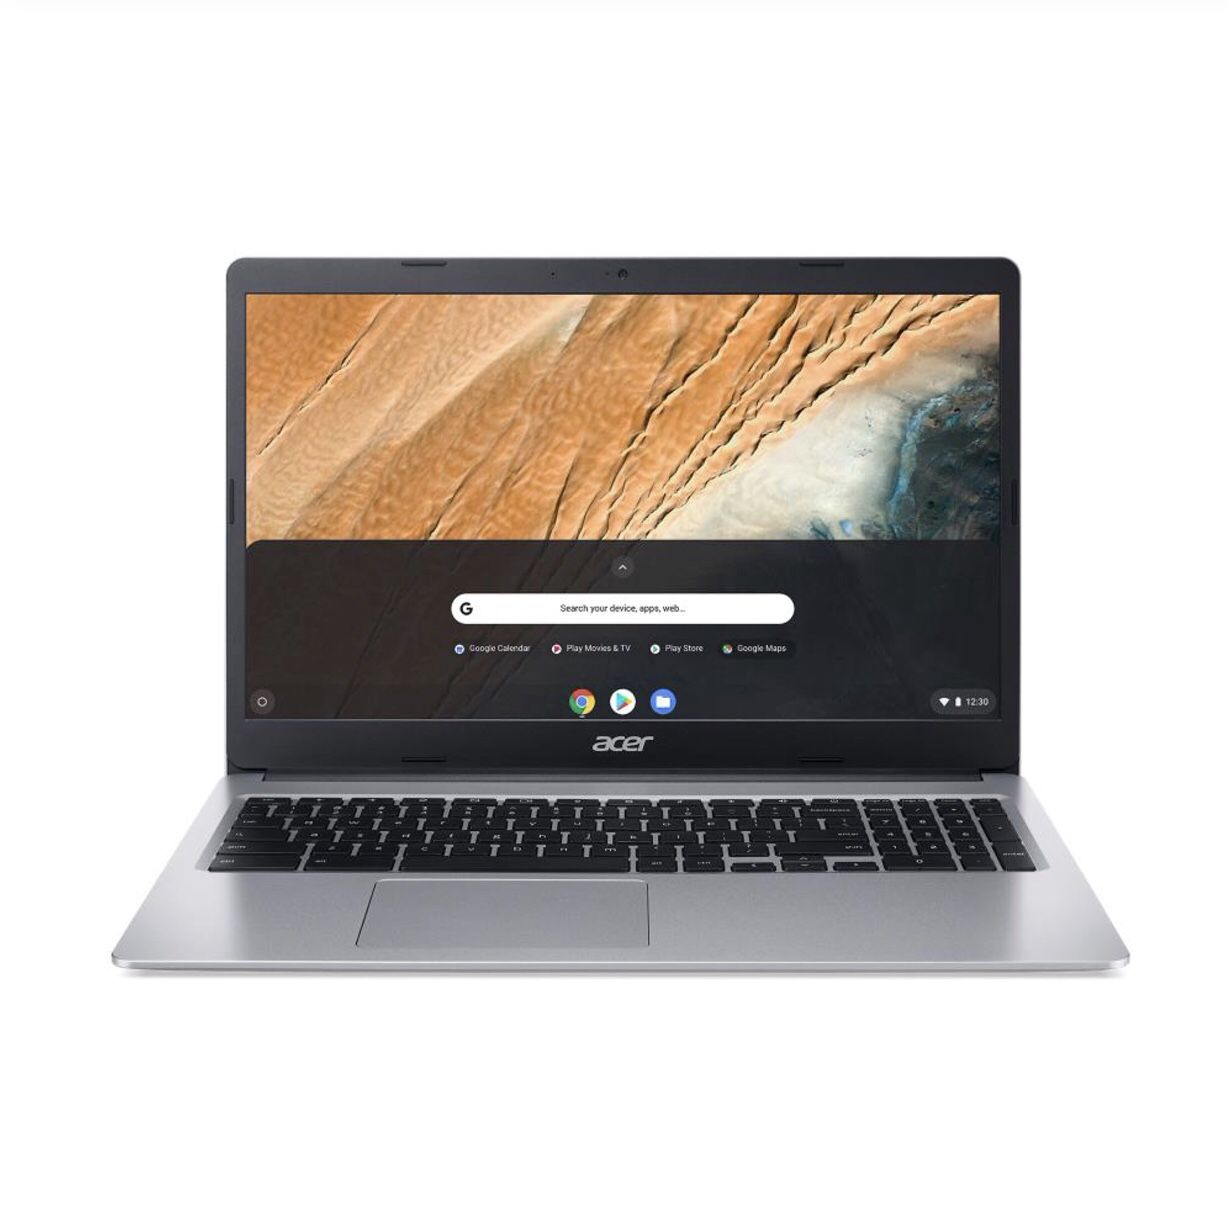 Acer 315 15.6” Chromebook